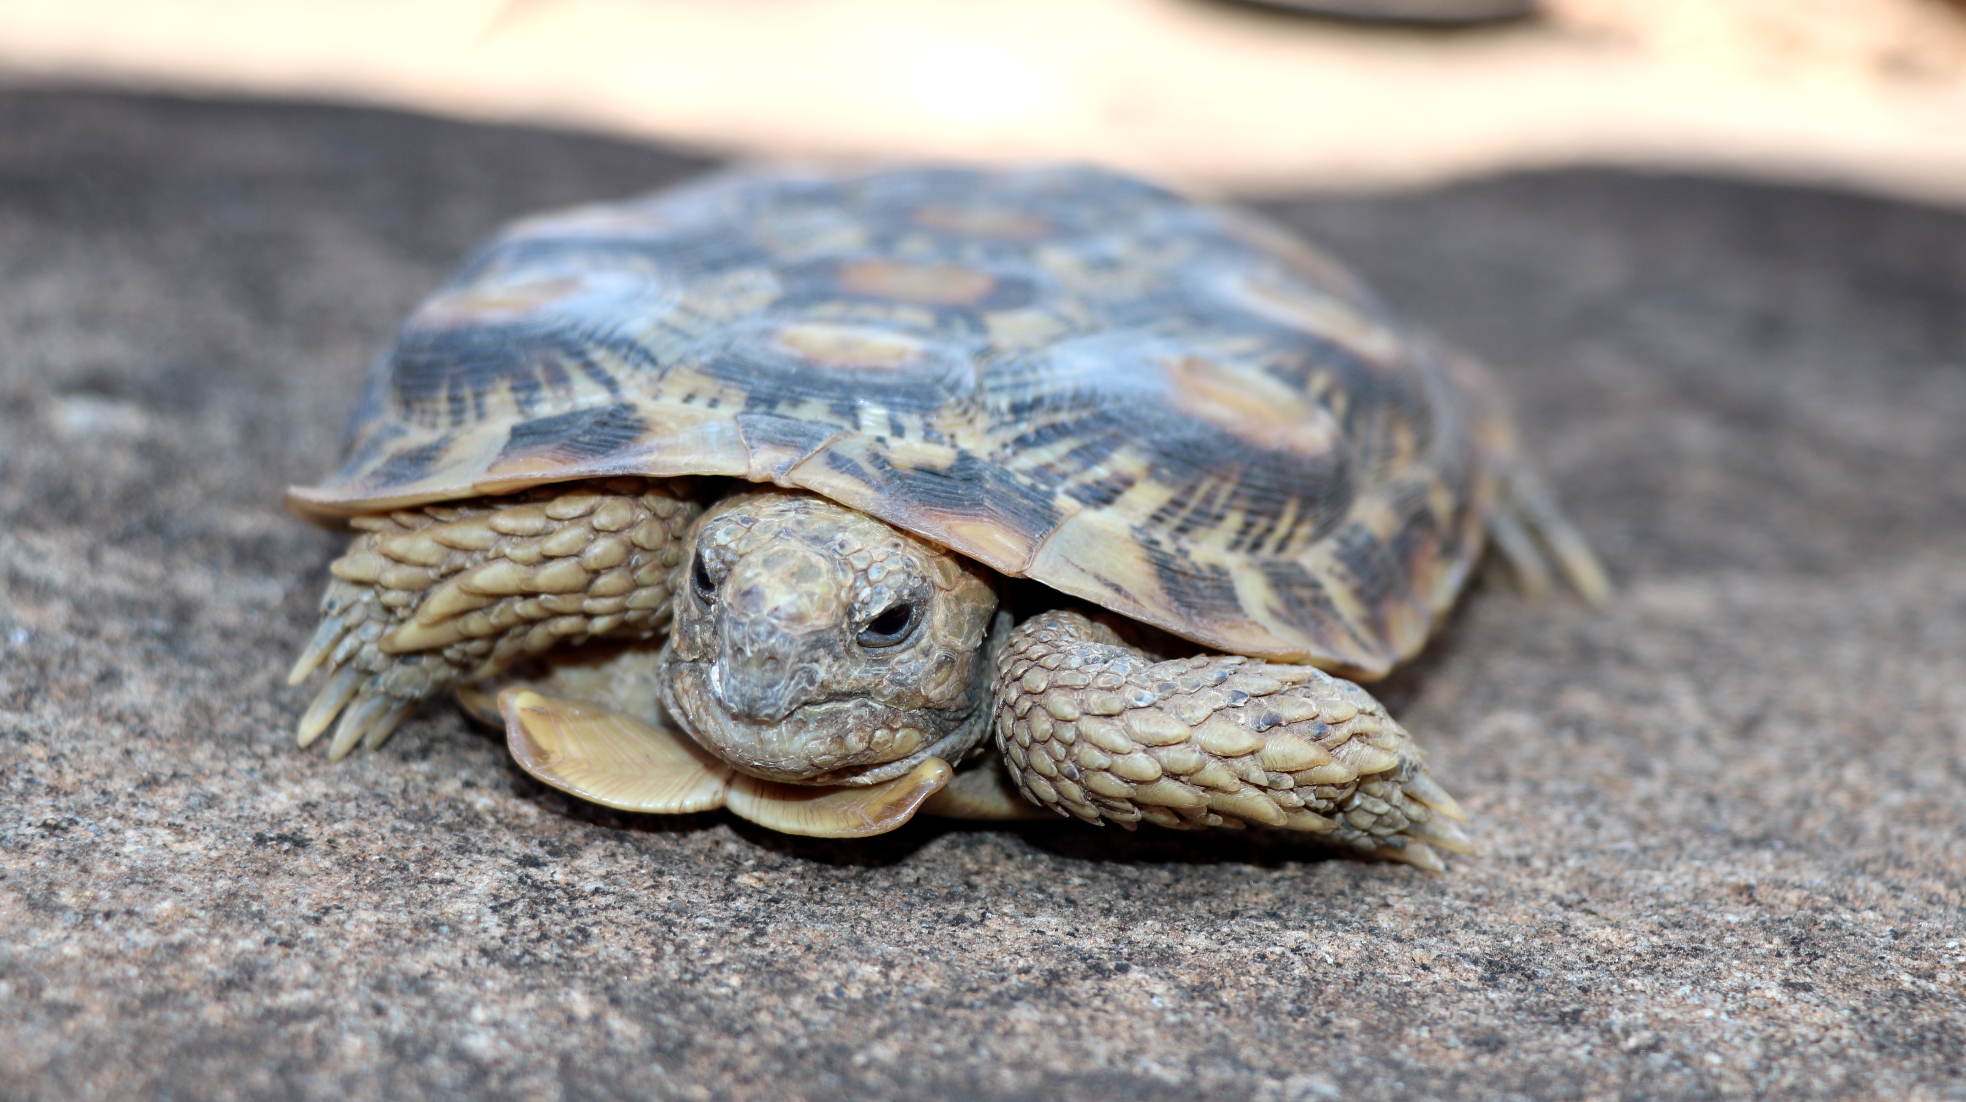 Critically Endangered Pancake Tortoise Discovered on Lewa